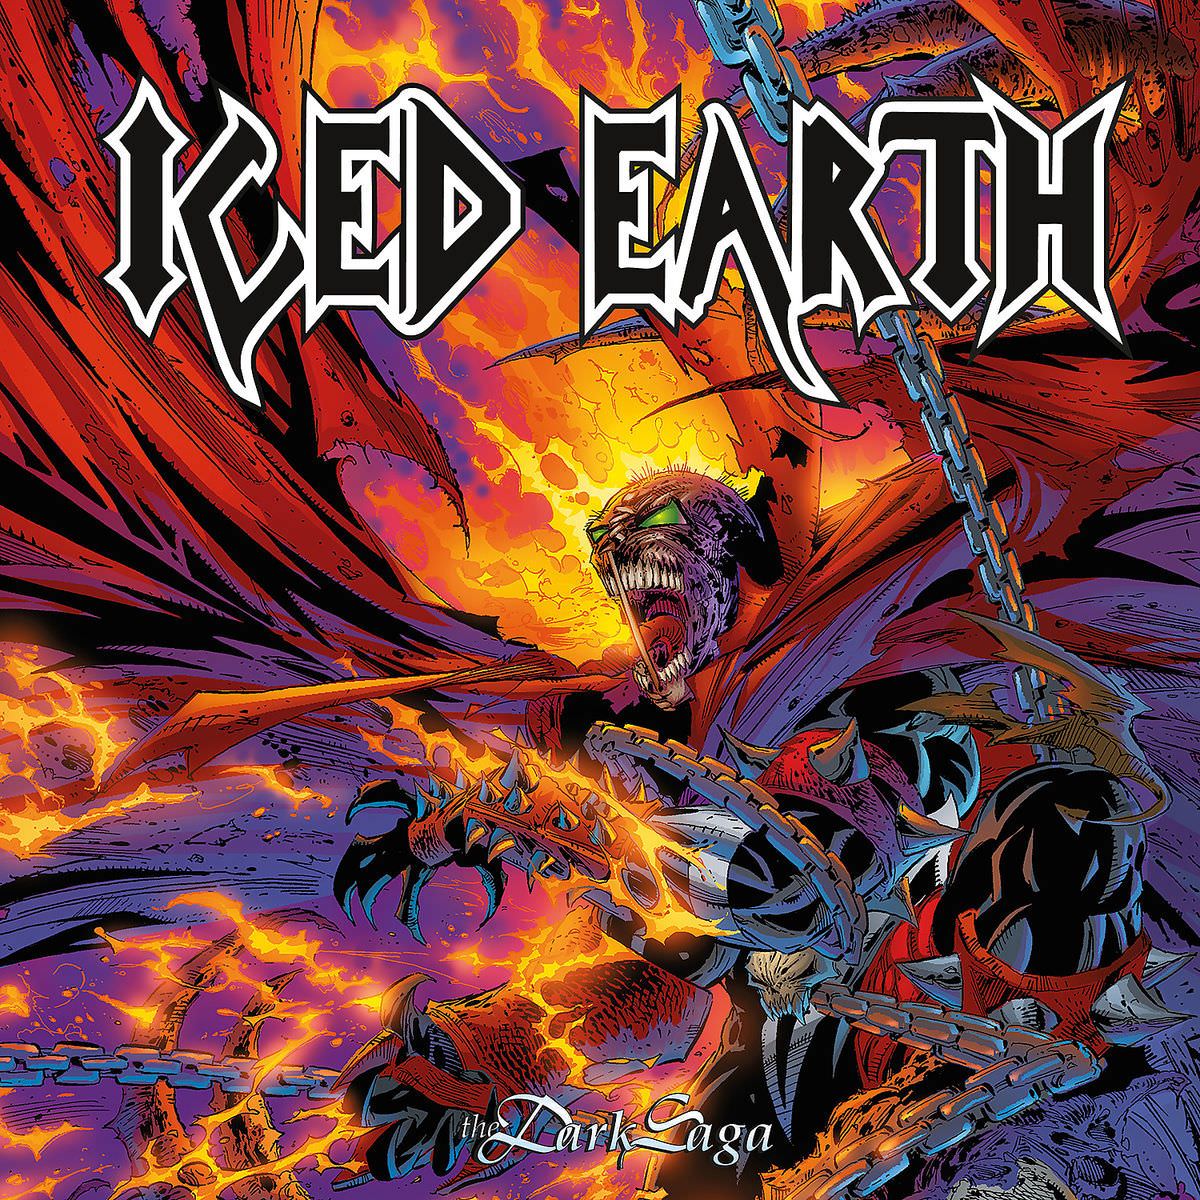 McFarlane’s Spawn’s Concept Album by Iced Earth “The Dark Saga”